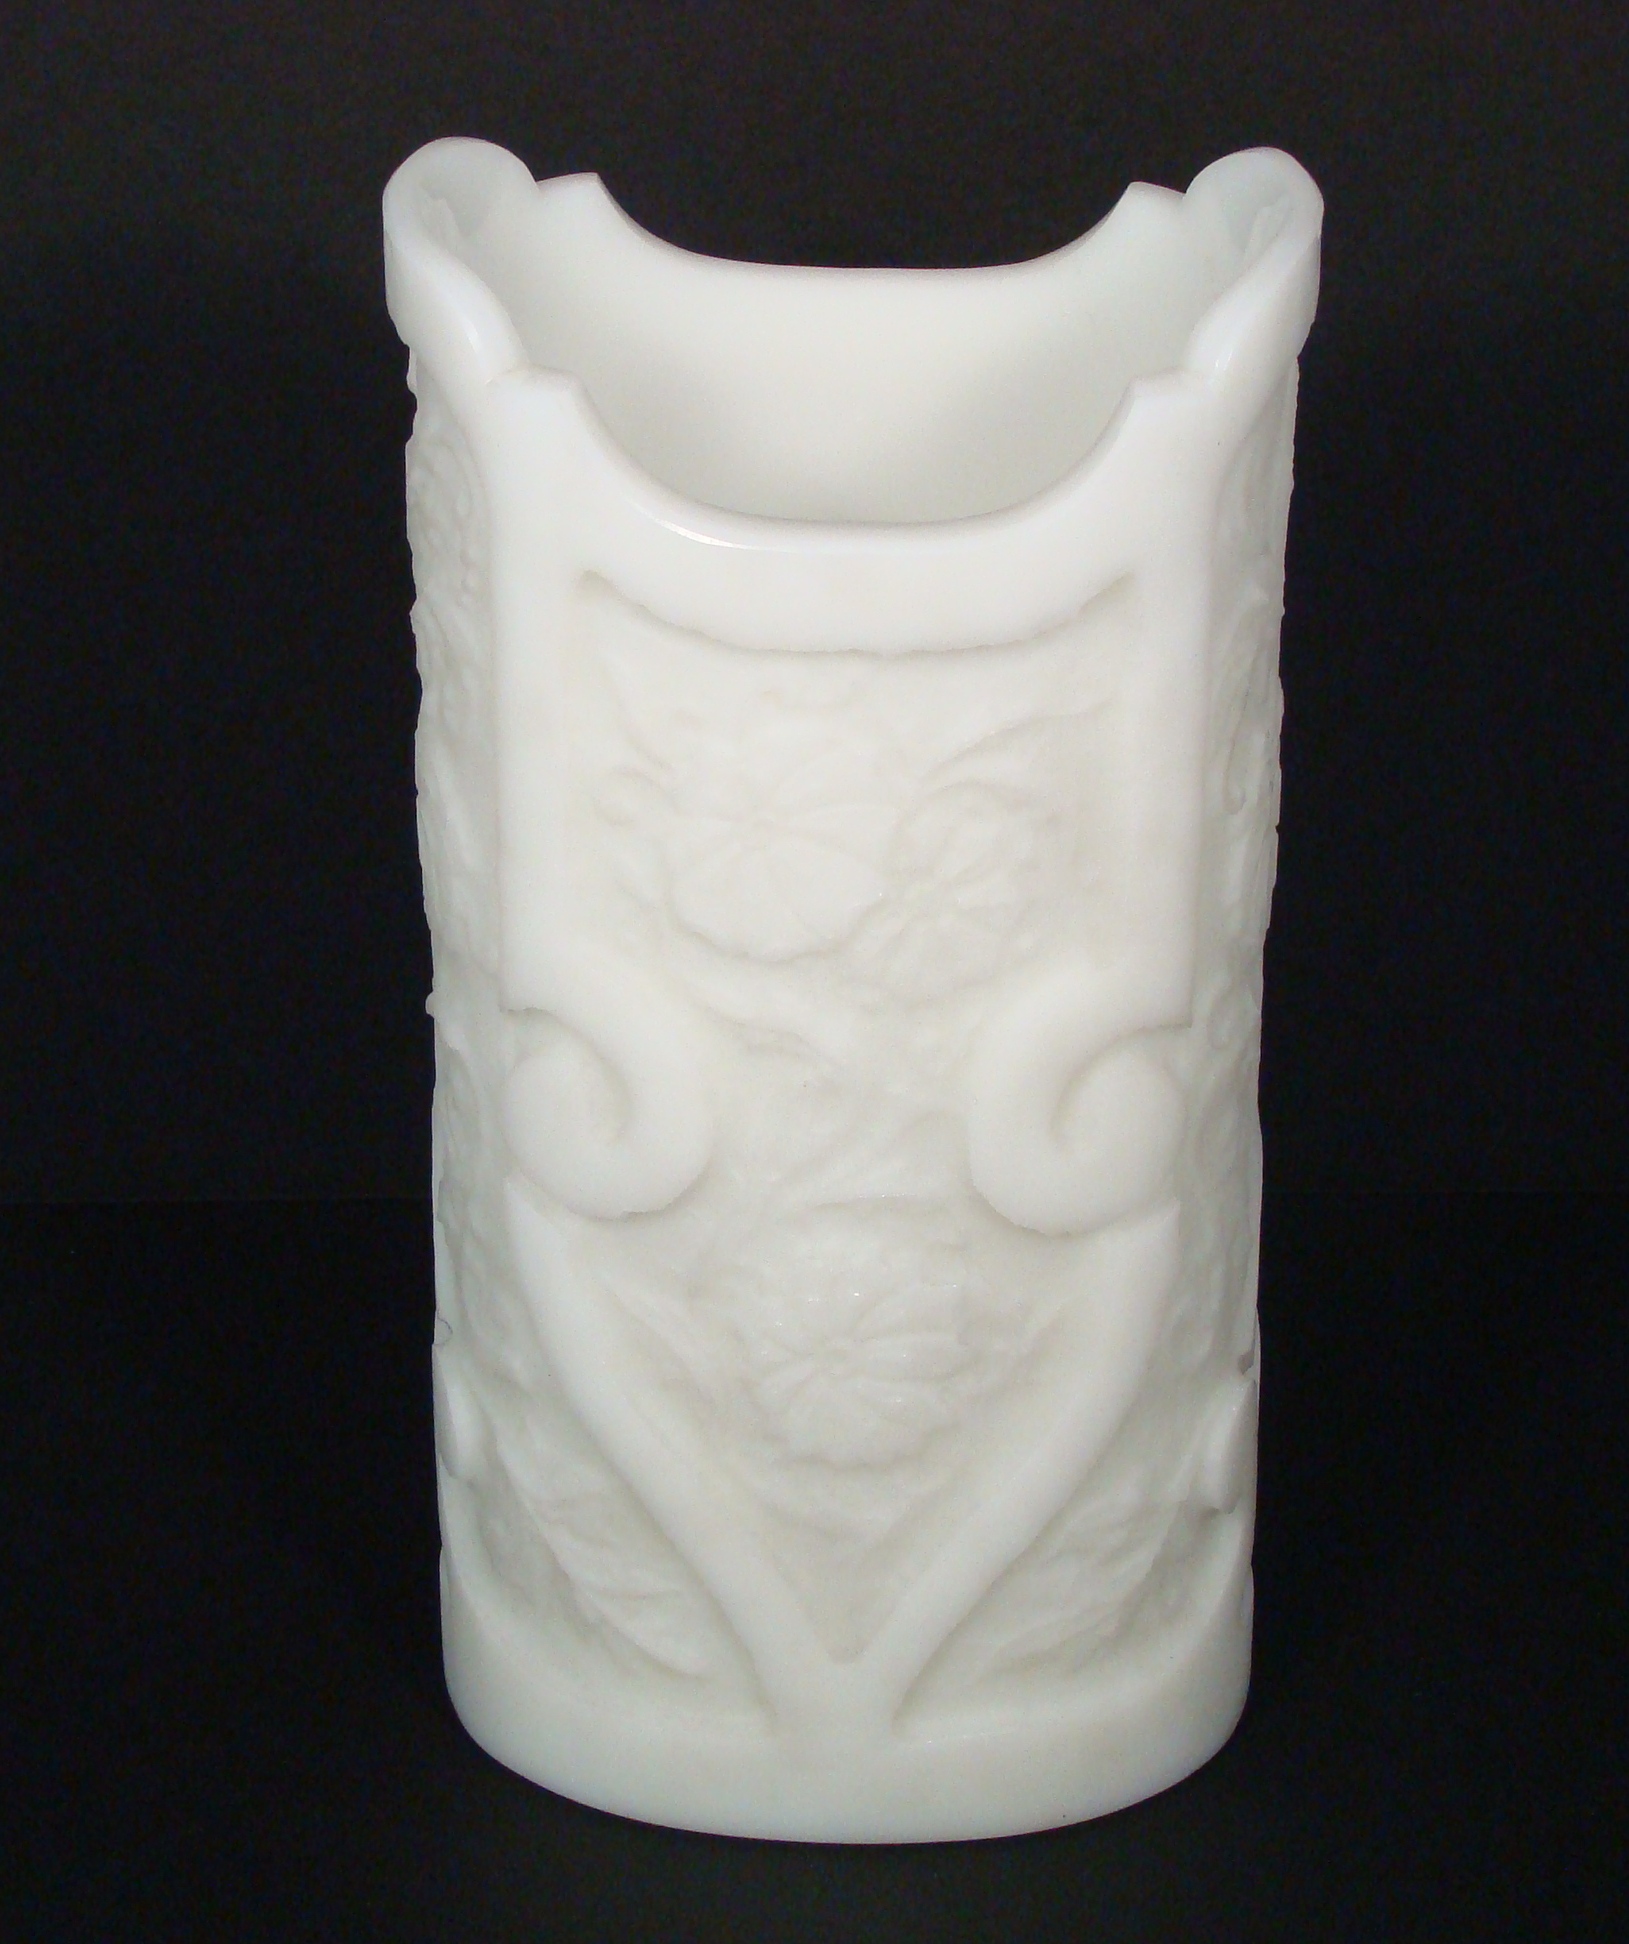 6456 - Carrara Marble Acid Etched Vase